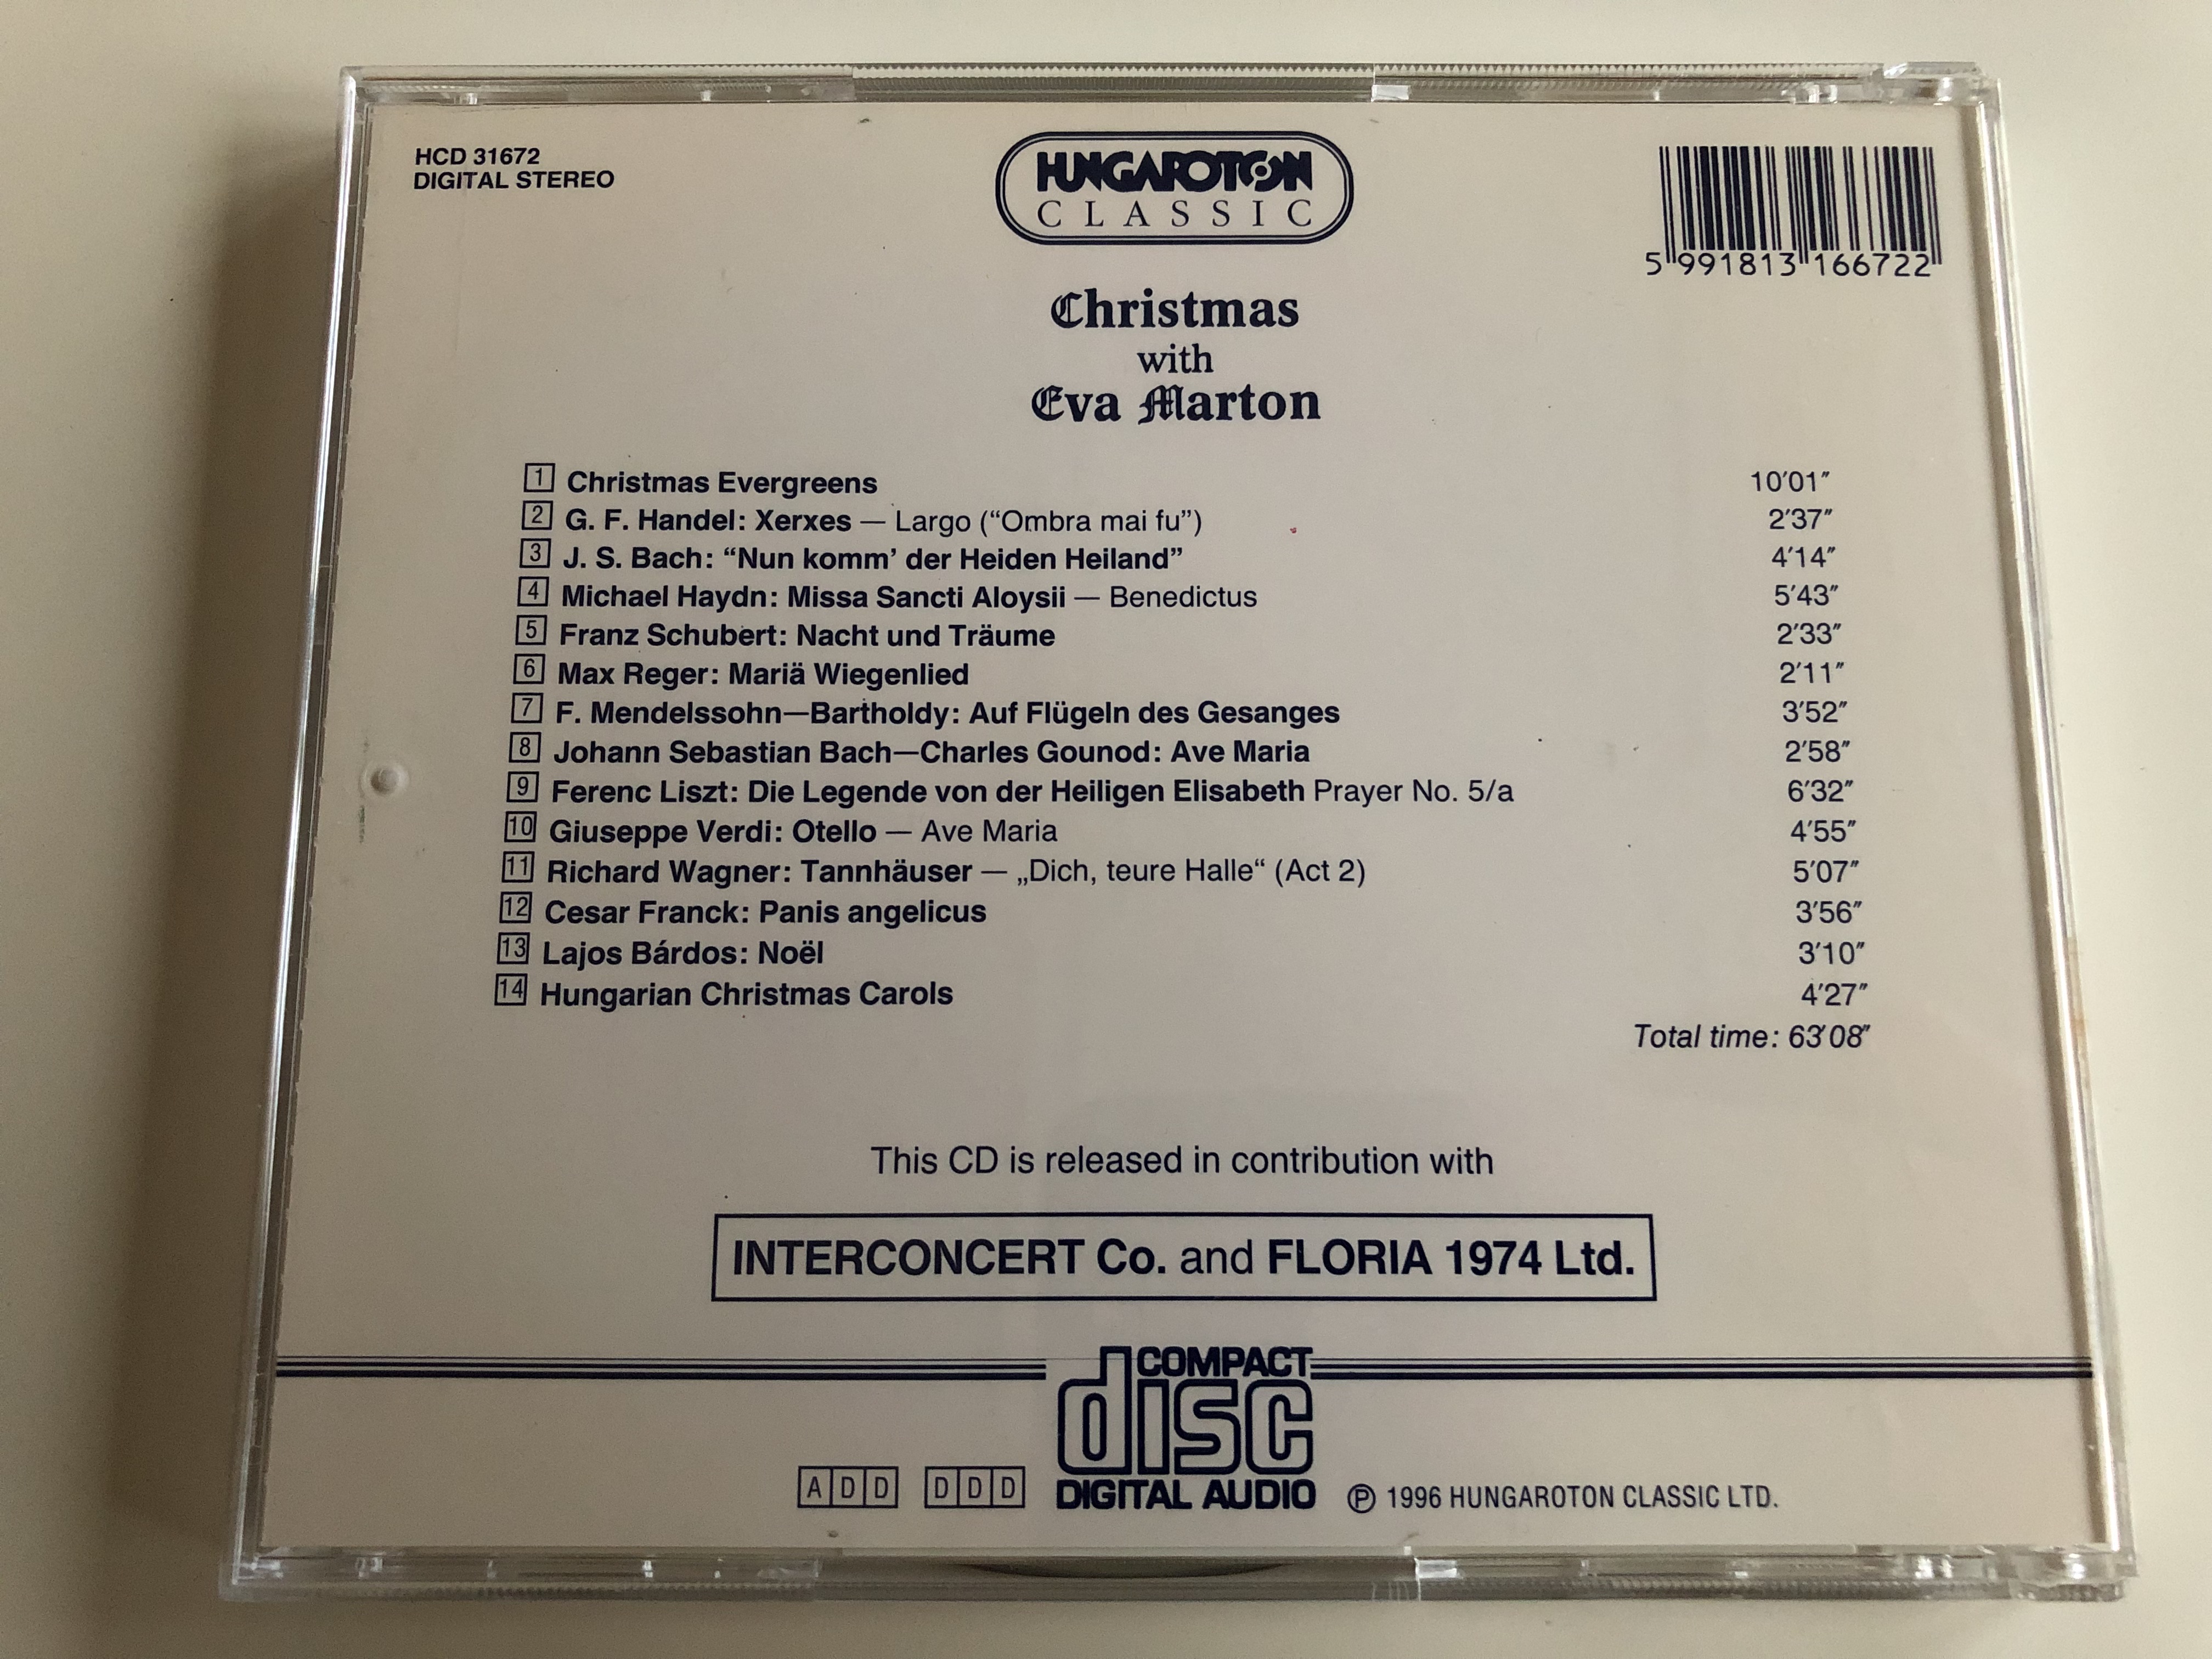 christmas-with-eva-marton-handel-schubert-mendelssohn-gounod-verdi-wagner-franck-b-rdos-audio-cd-1996-hungaroton-classic-hcd-31672-6-.jpg